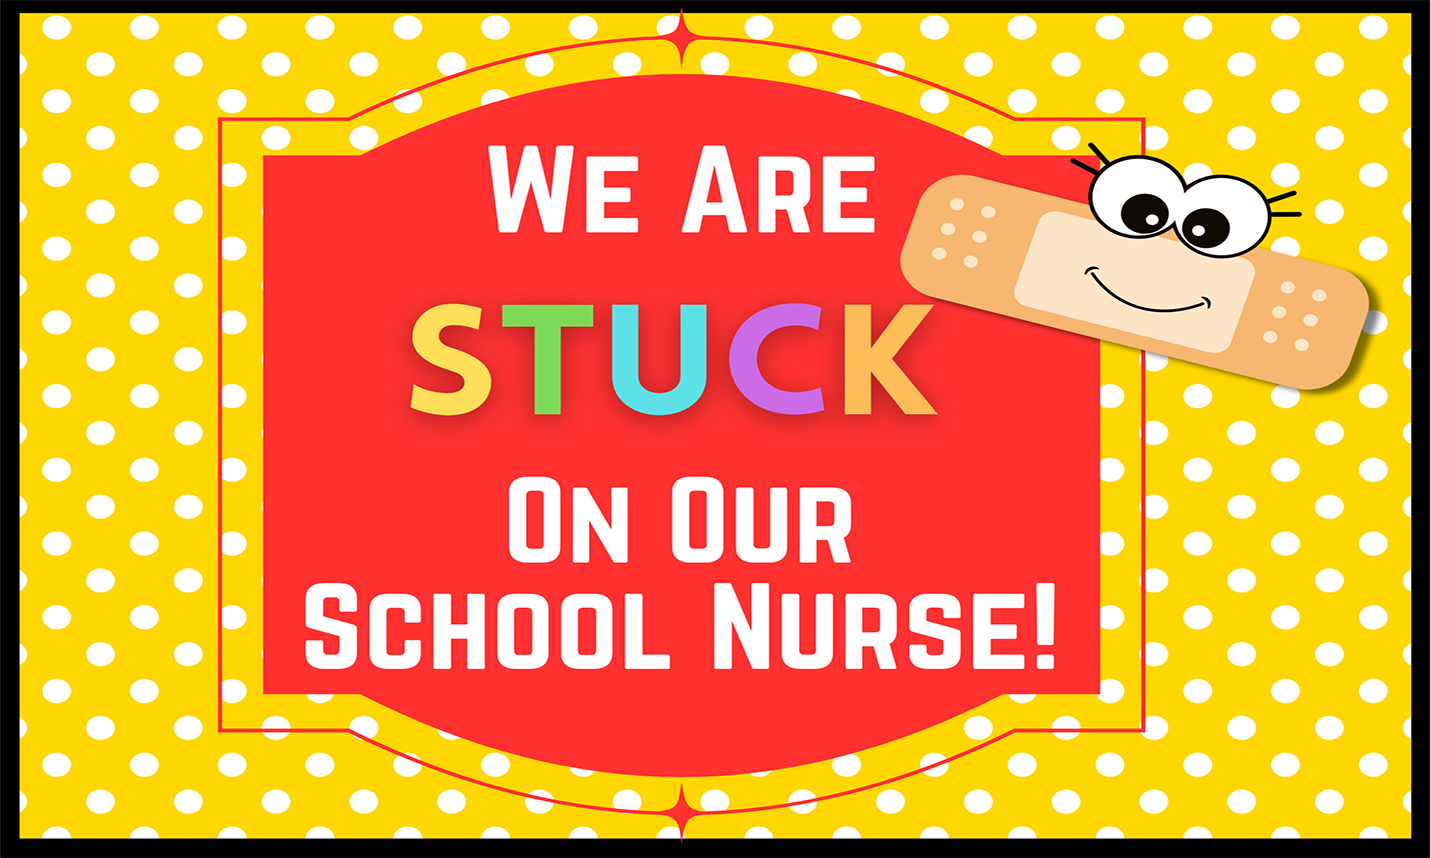 We are STUCK on our school nurse!